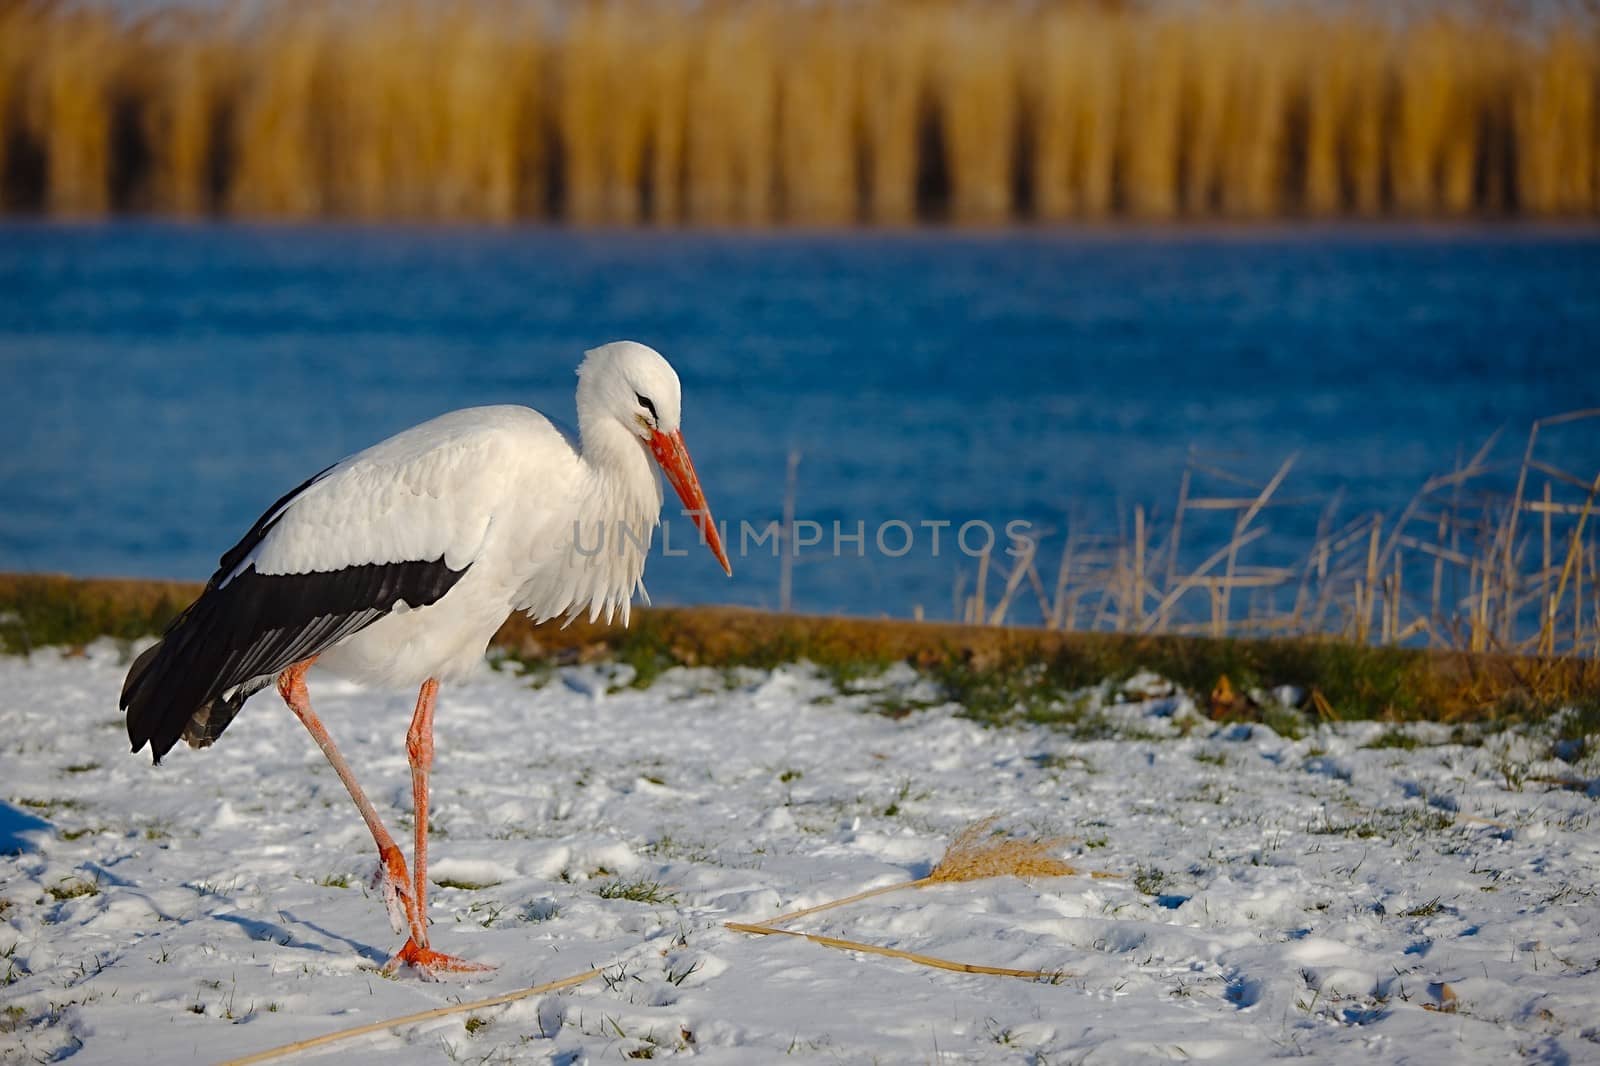 Stork in Winter by Gudella